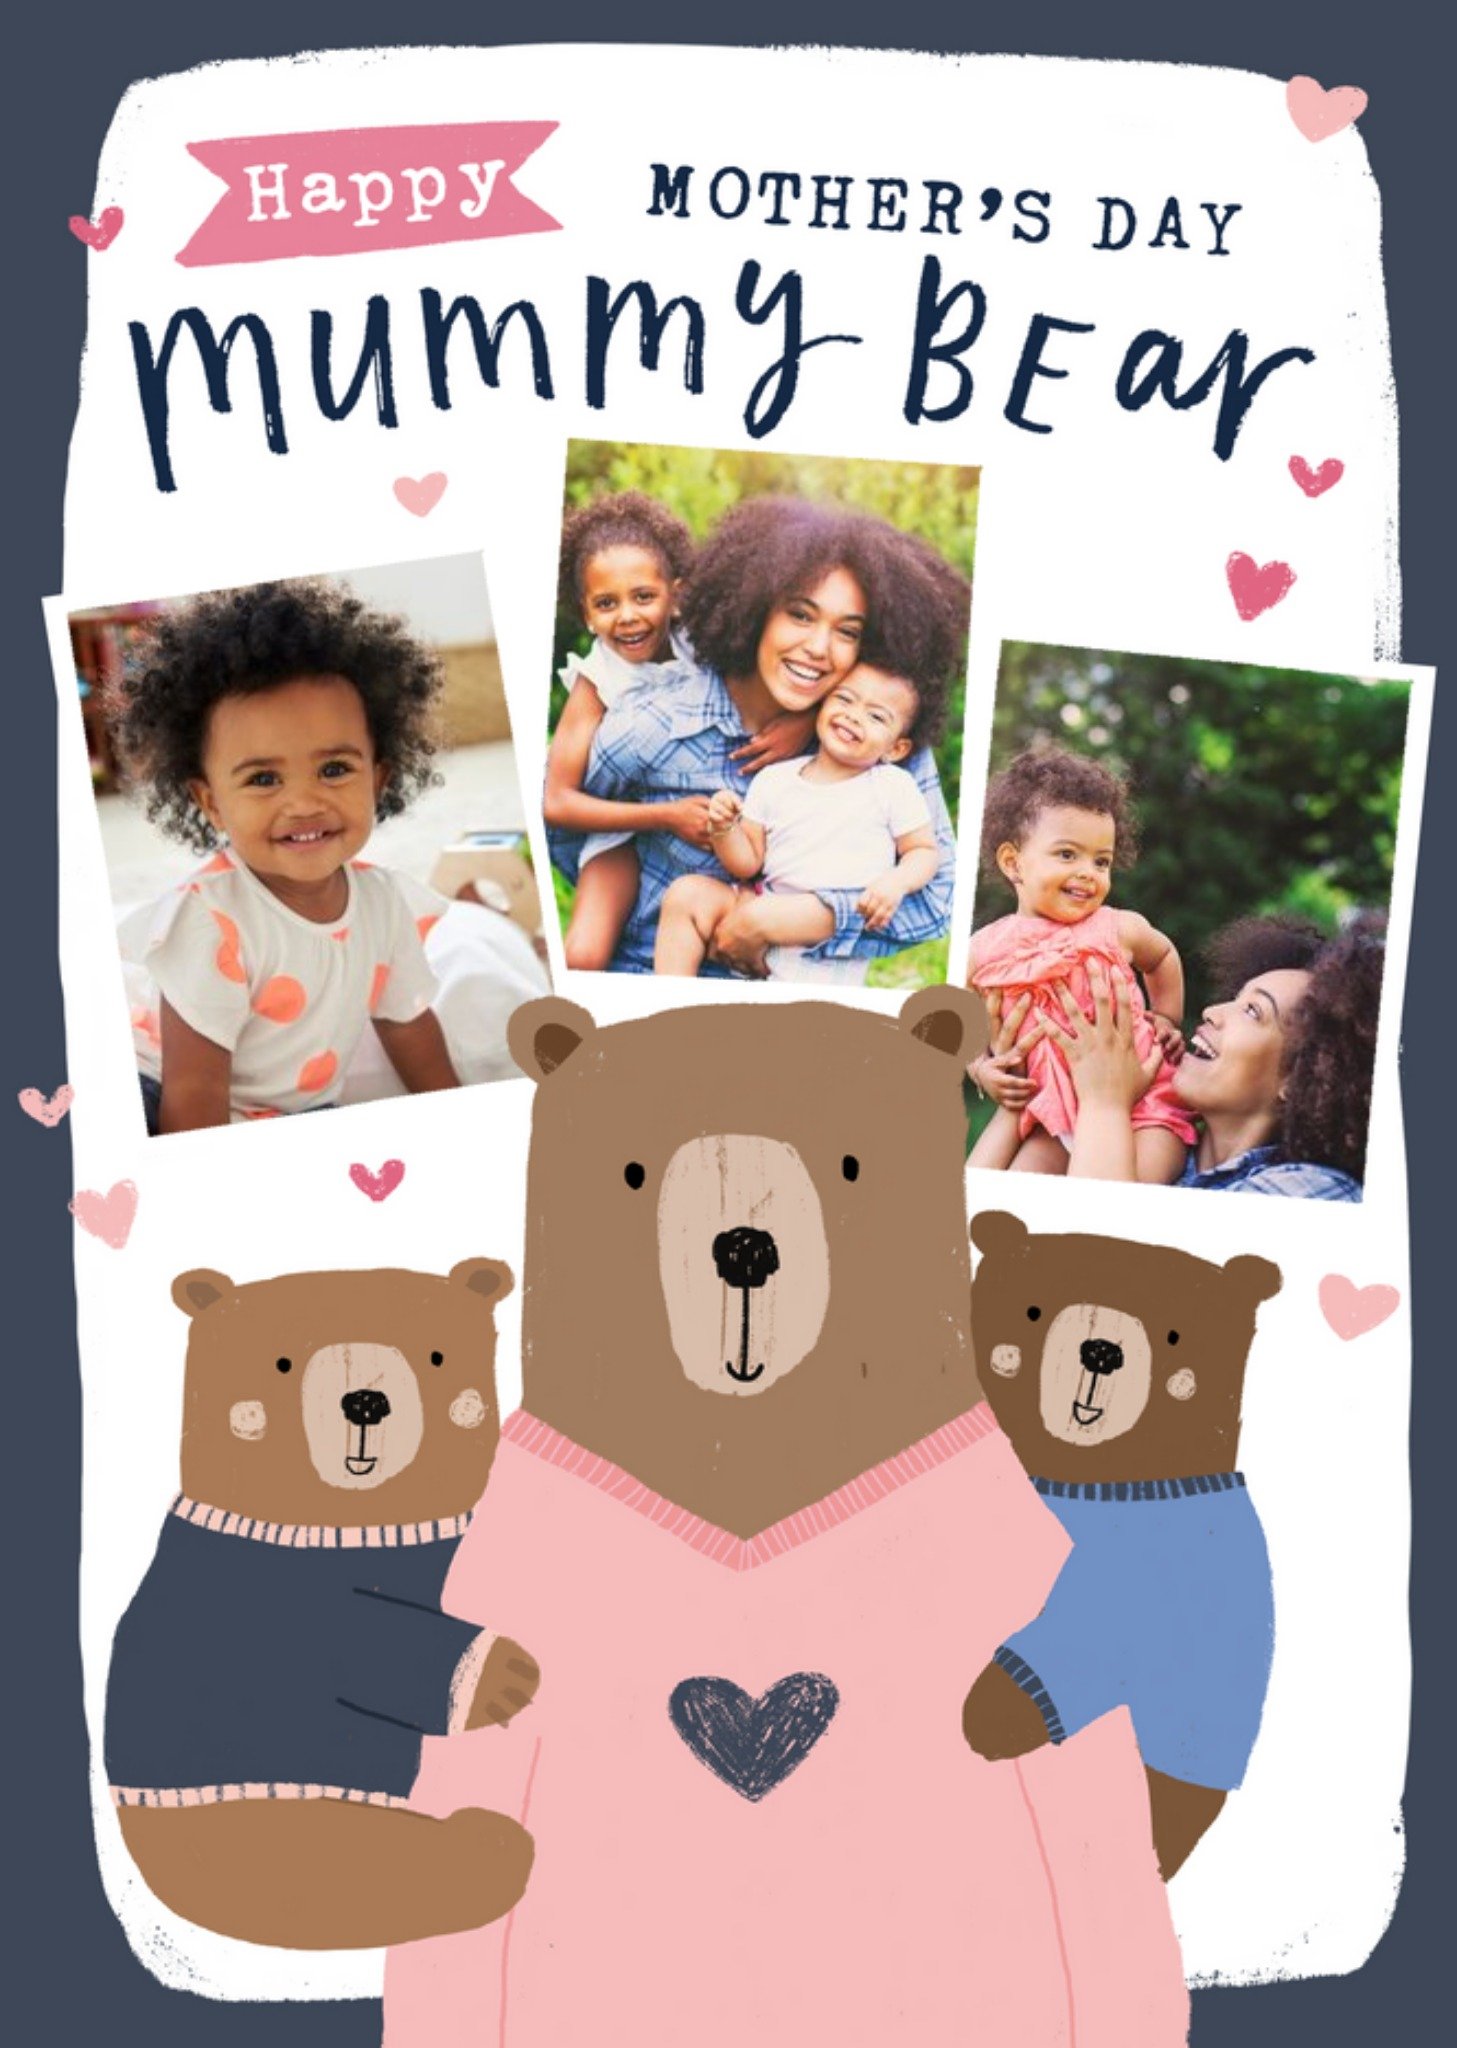 Moonpig Beary Lovely Happy Mothers Day Mummy Bear Photo Upload Mothers Day Card Ecard